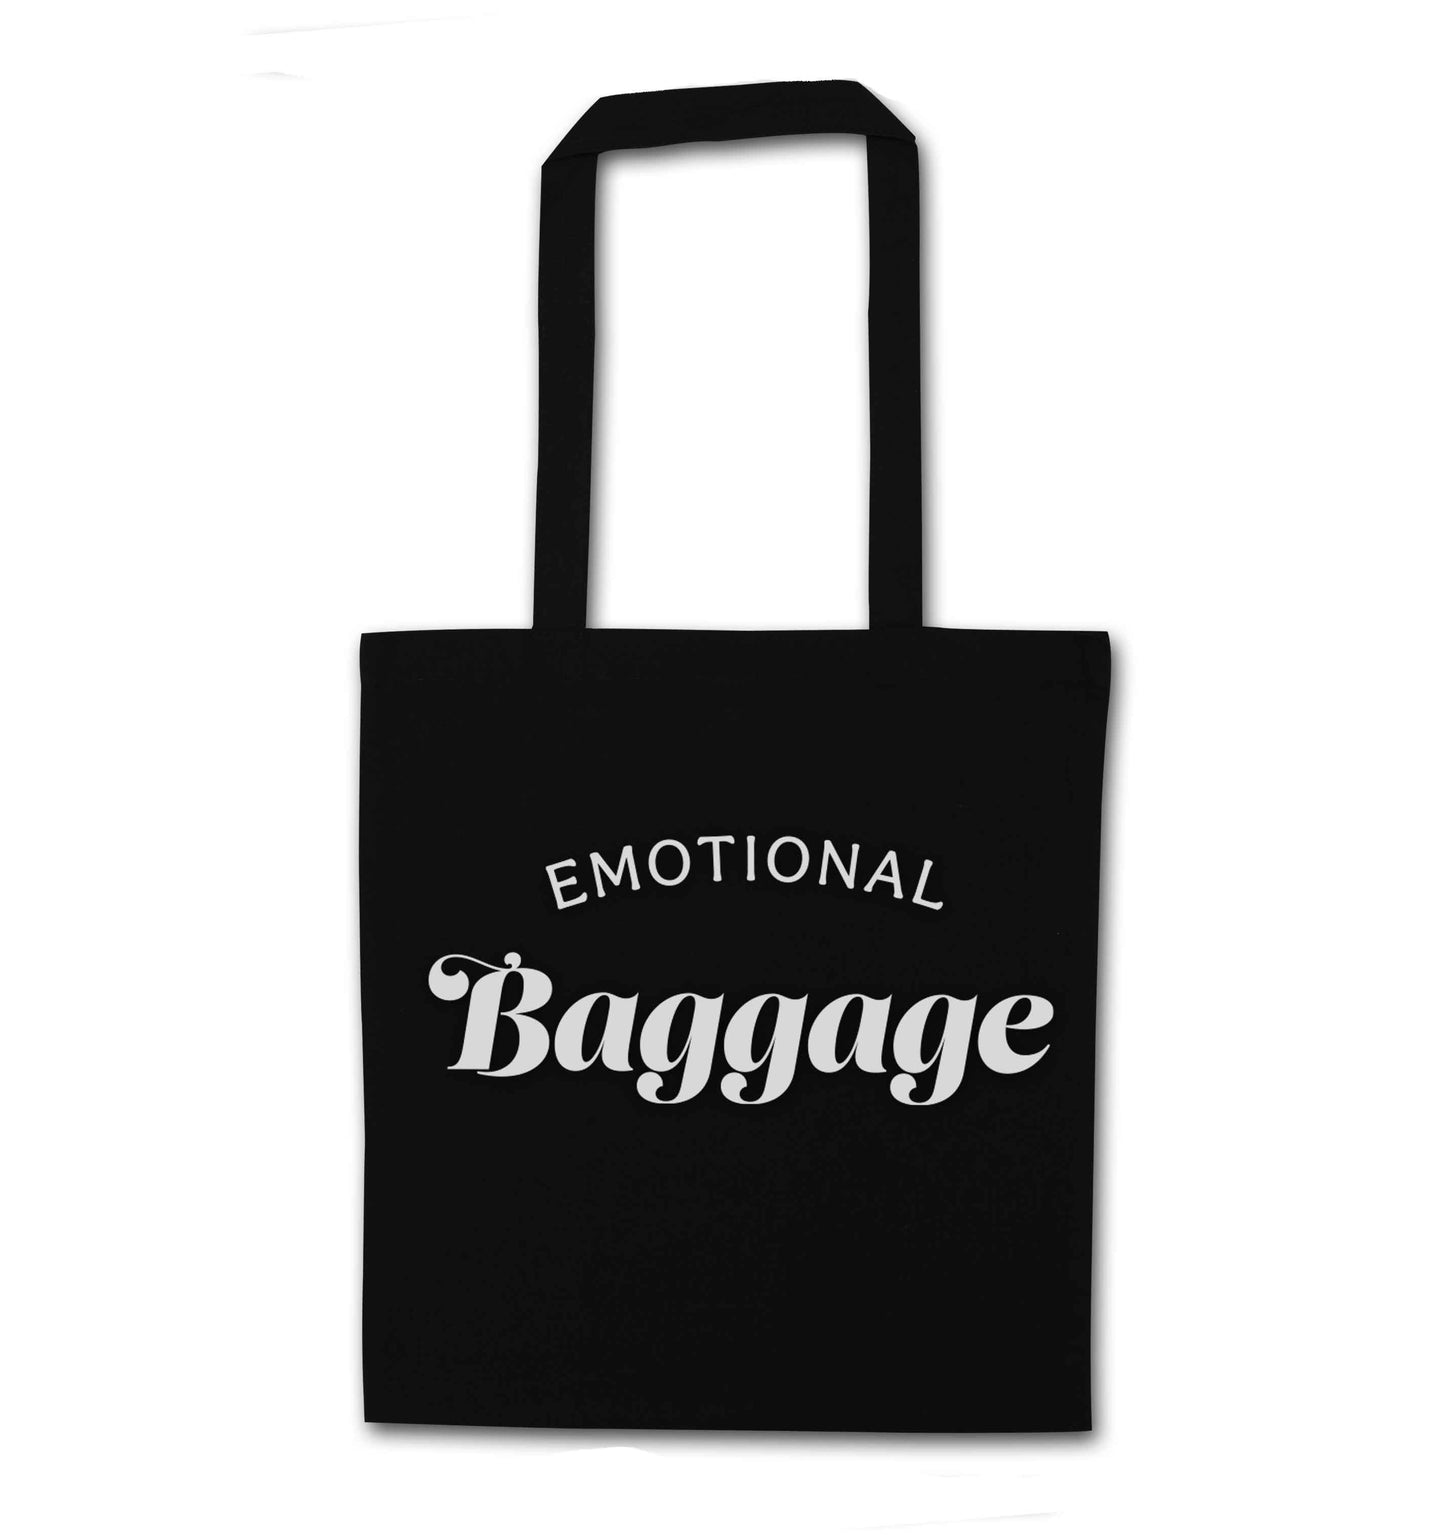 Emotional baggage black tote bag